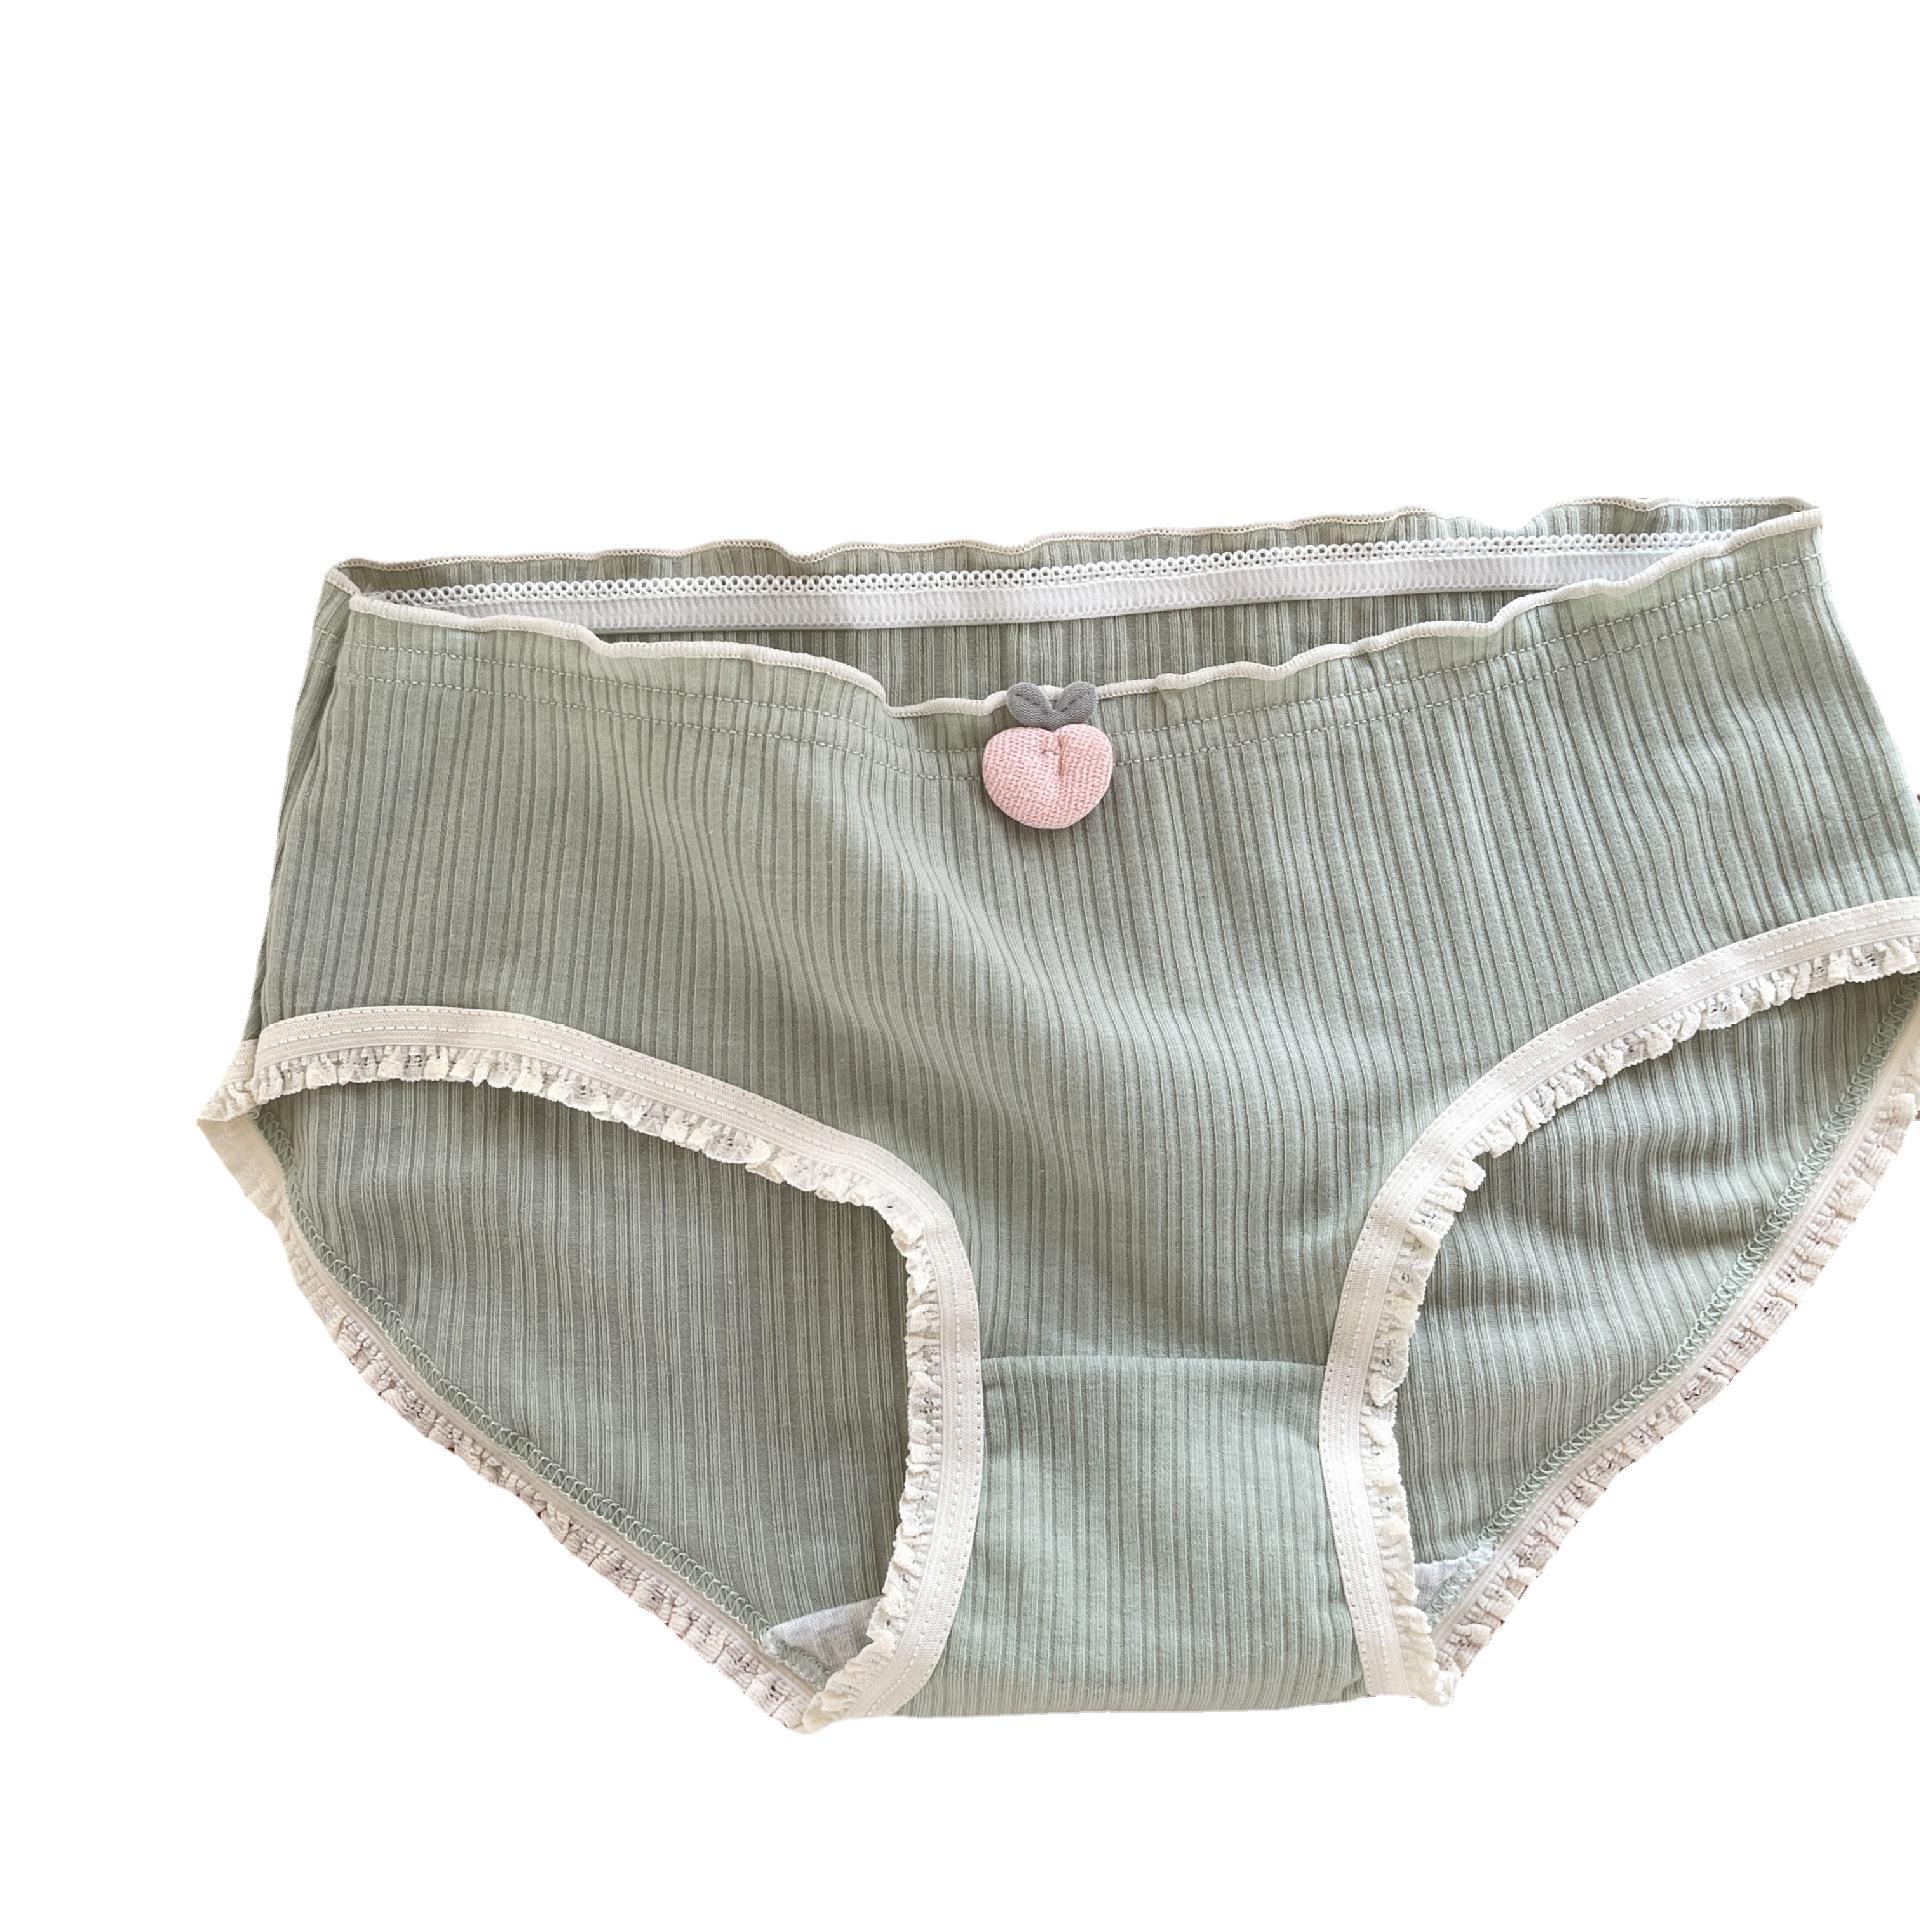 Ka Meow Class a Breathable Cotton Underwear Female Cotton Mid Waist Peach Japanese Girl Cotton Crotch Women's Triangle